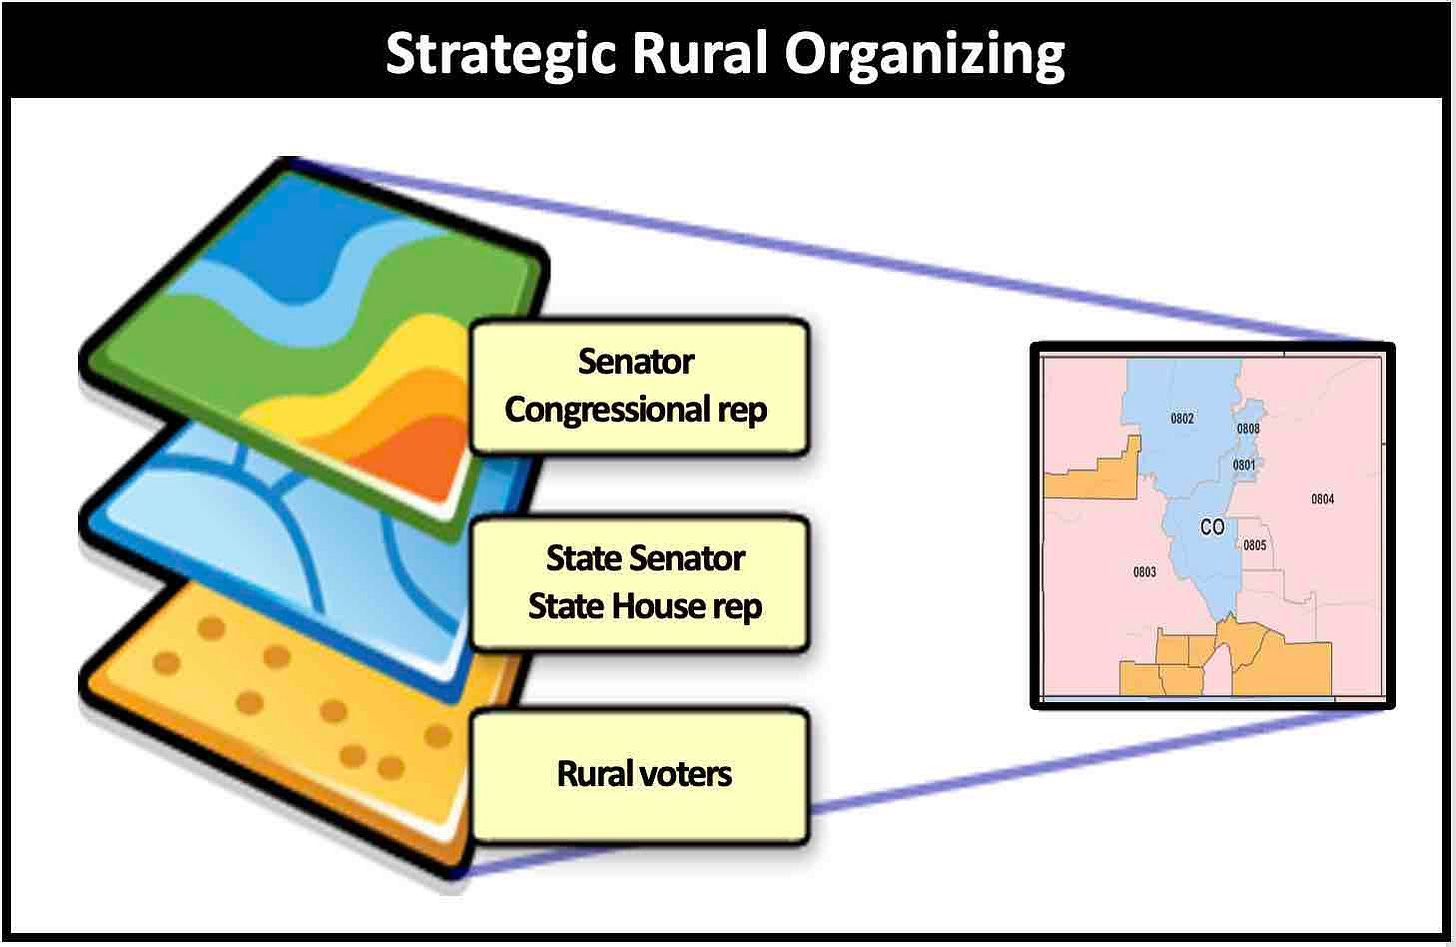 Strategic organizing goes better with maps